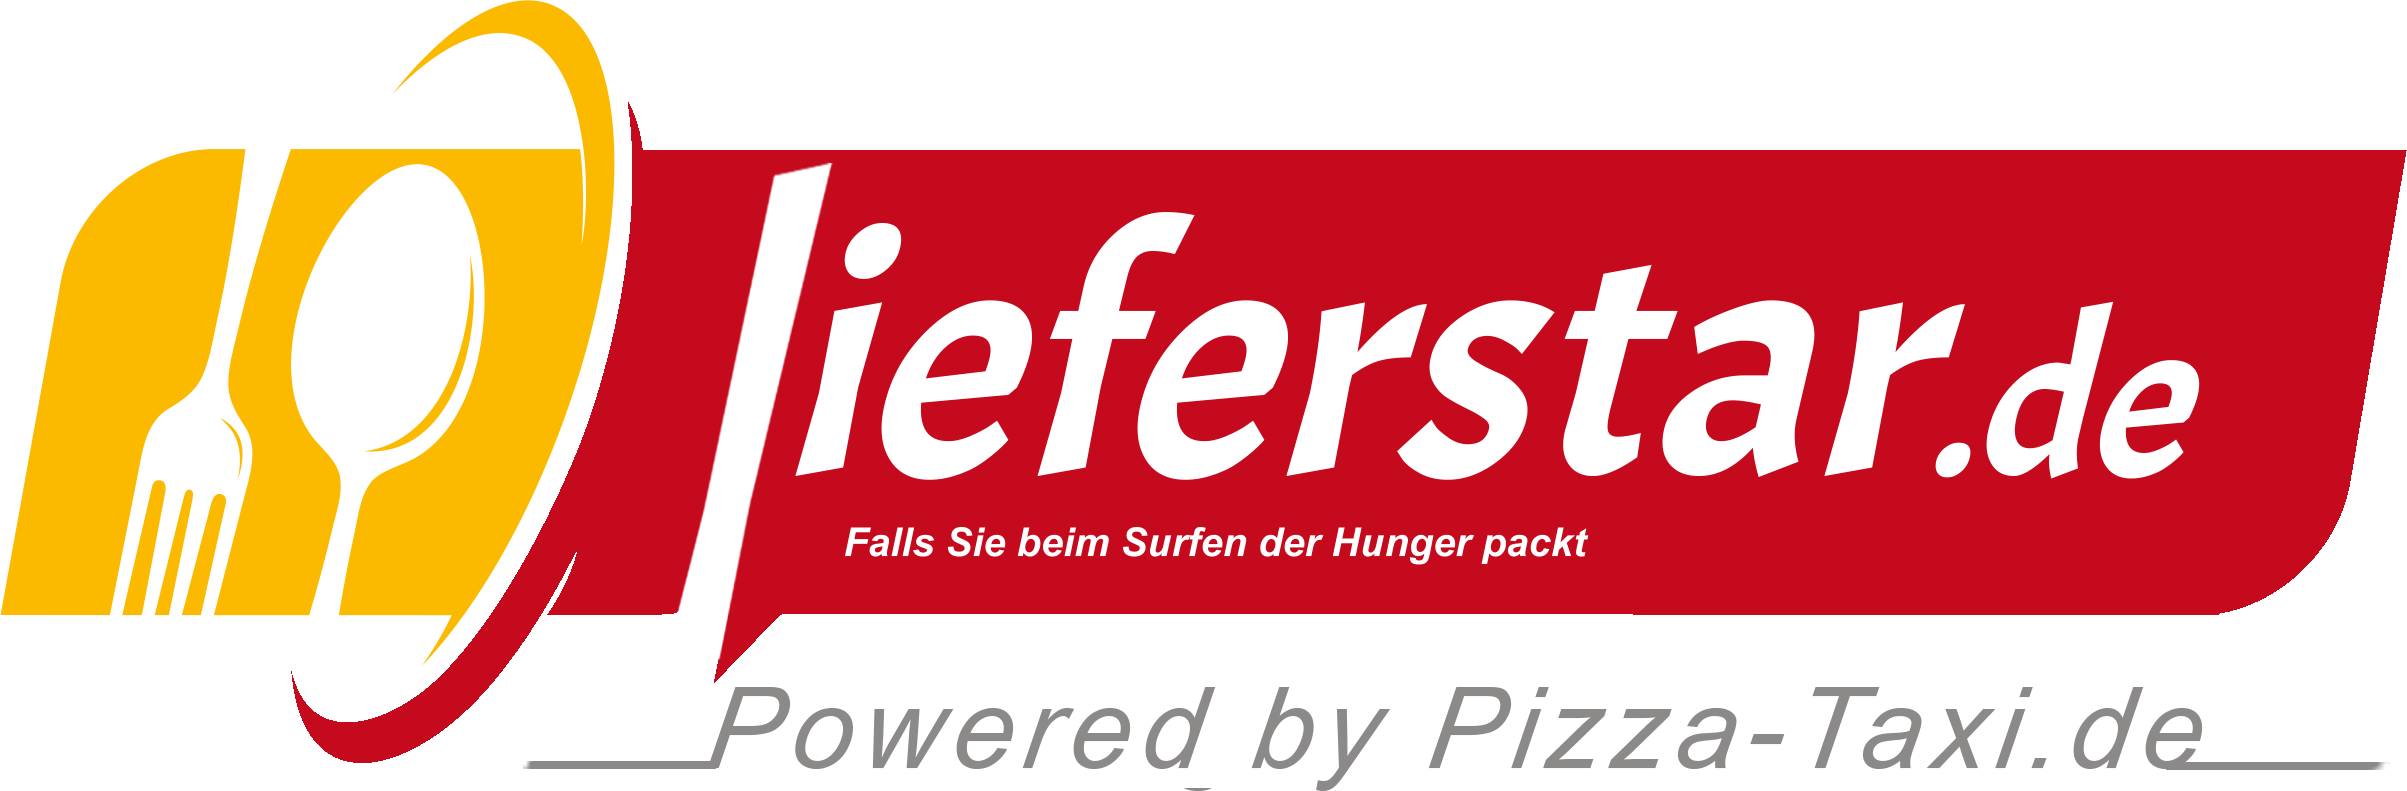 Lieferstar.de Logo